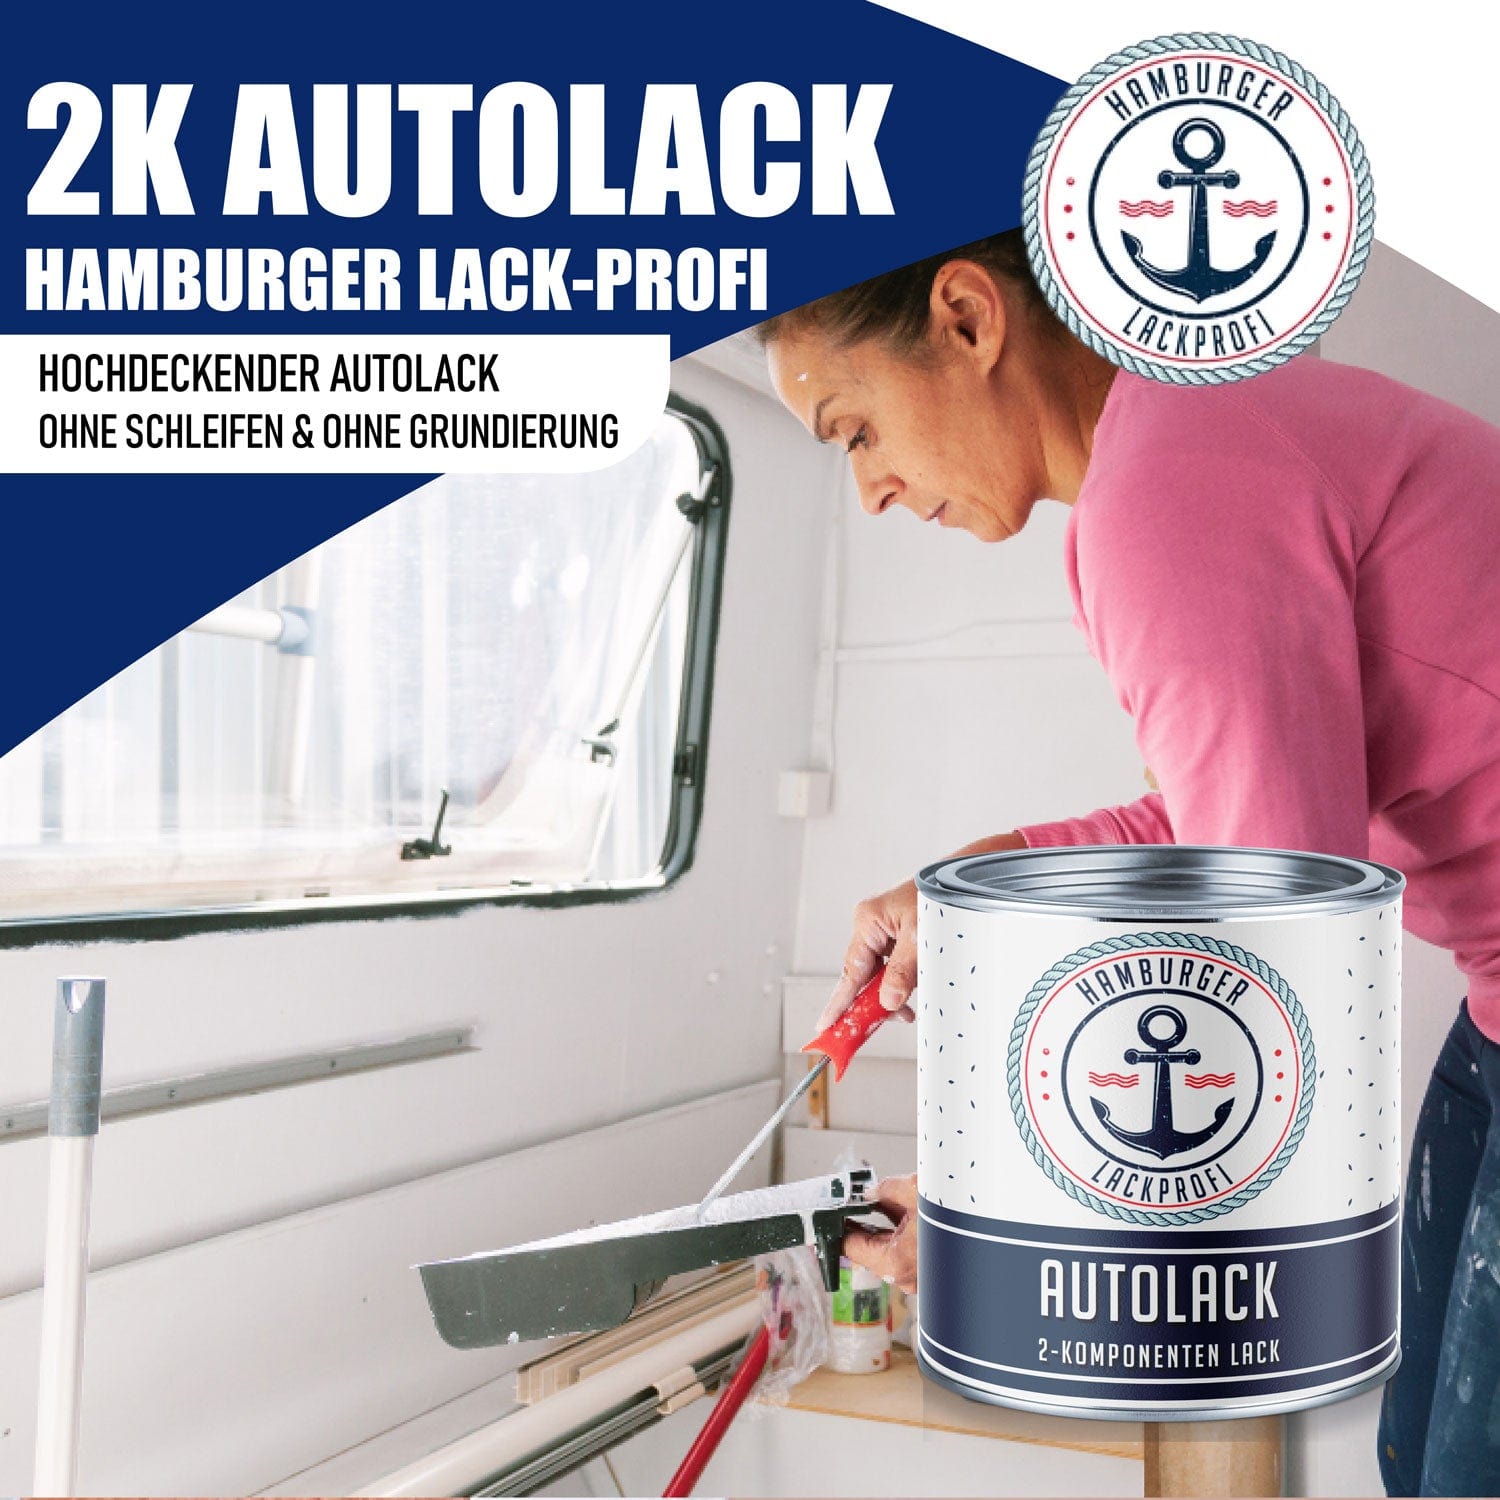 Hamburger Lack-Profi Lacke & Beschichtungen Hamburger Lack-Profi 2K Autolack in Telemagenta RAL 4010 mit Lackierset (X300) & Verdünnung (1 L) - 30% Sparangebot